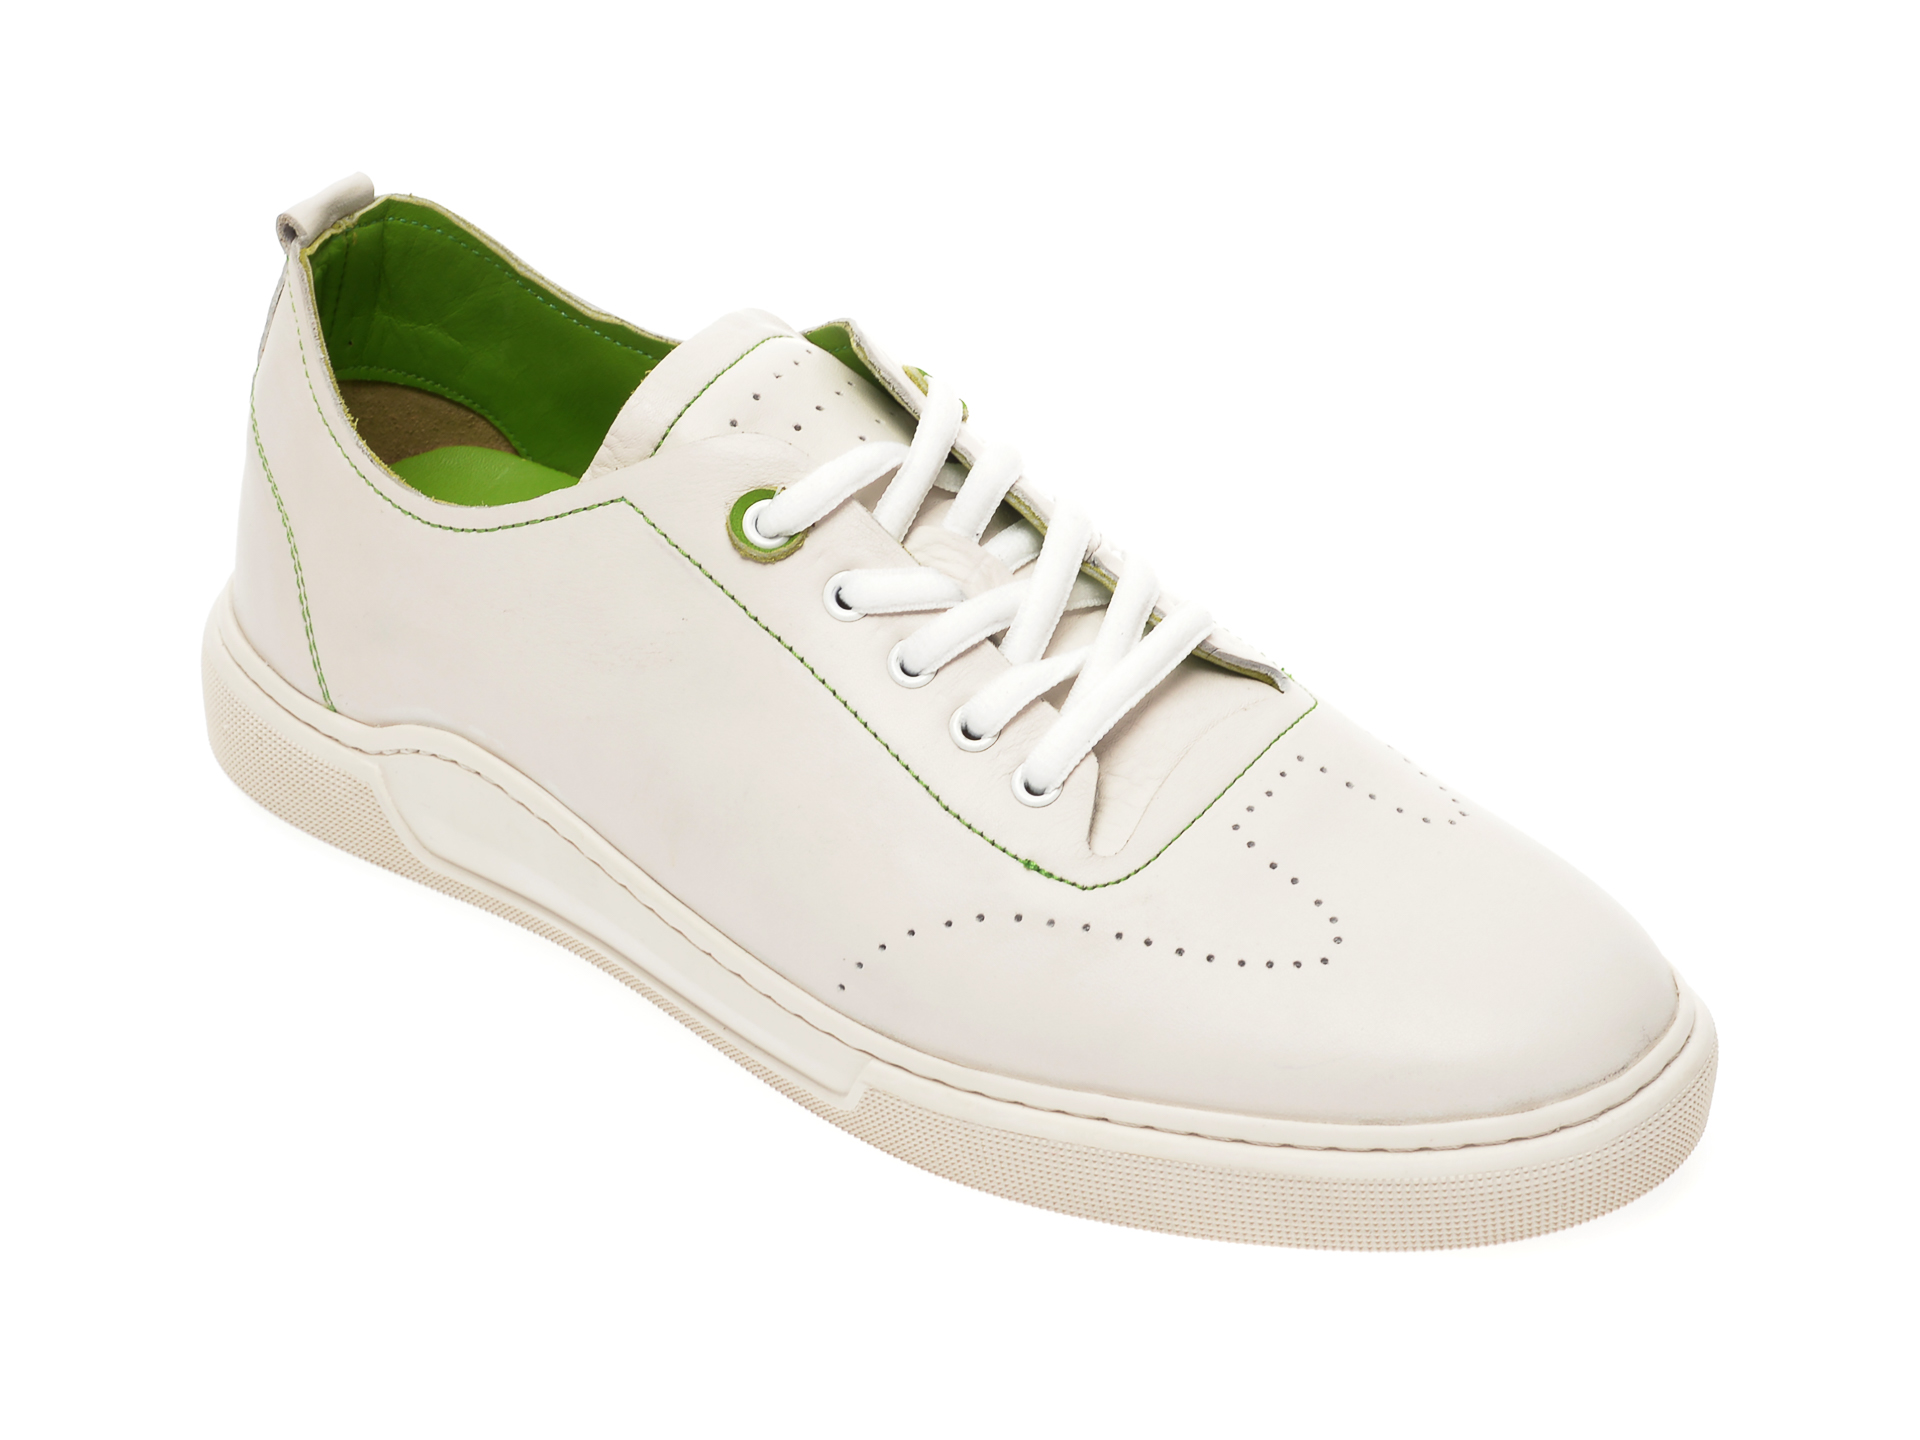 Pantofi sport OTTER albi, 48701, din piele naturala